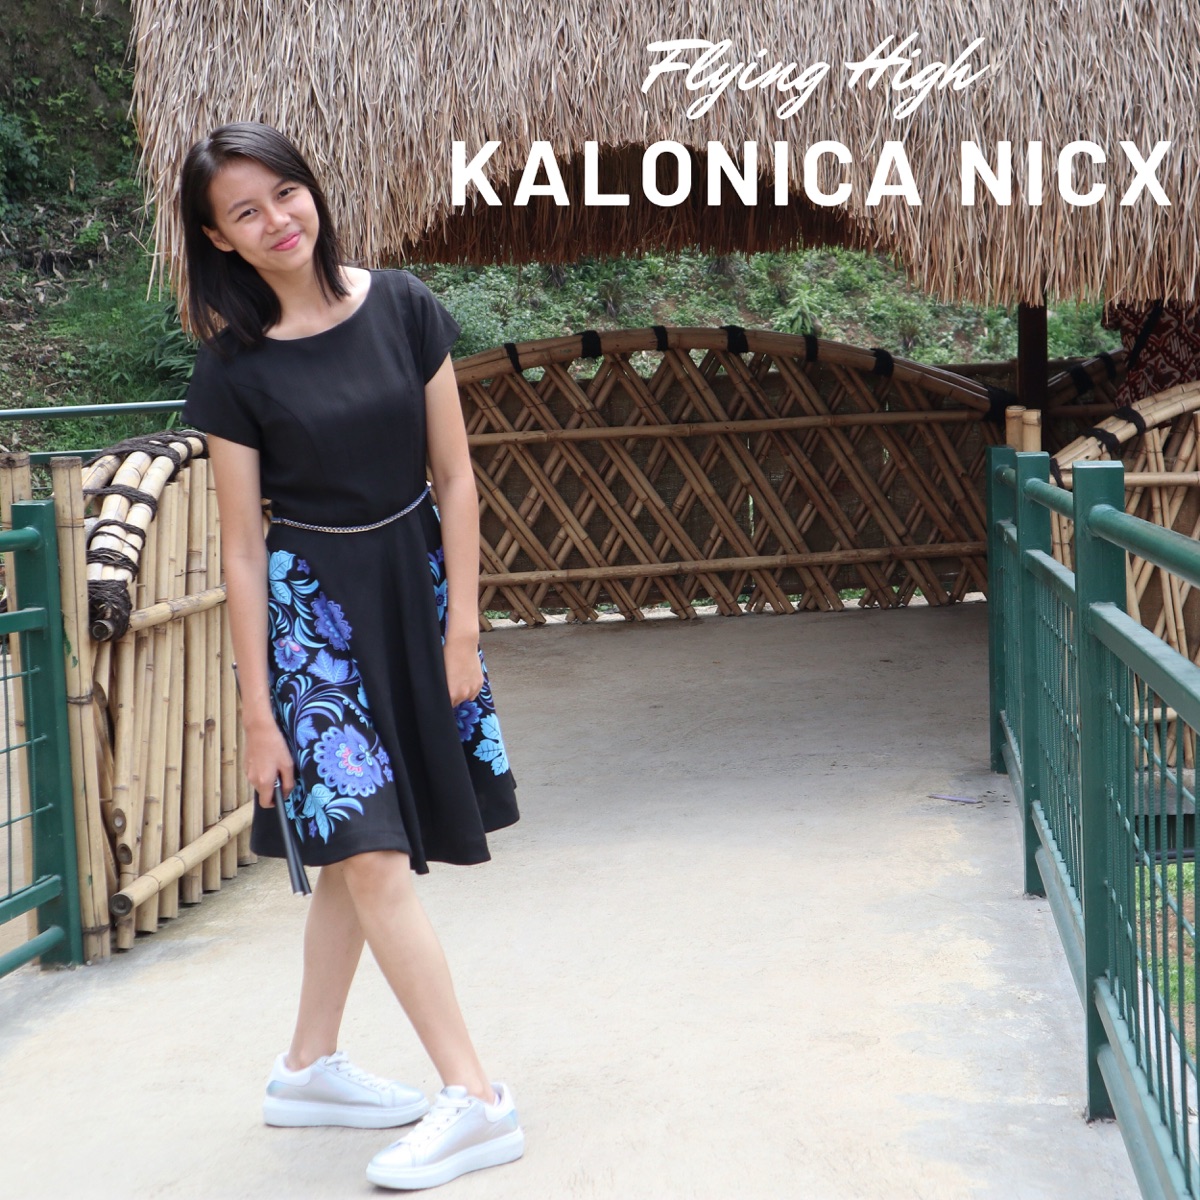 Flying High - Single - Album by Kalonica Nicx - Apple Music